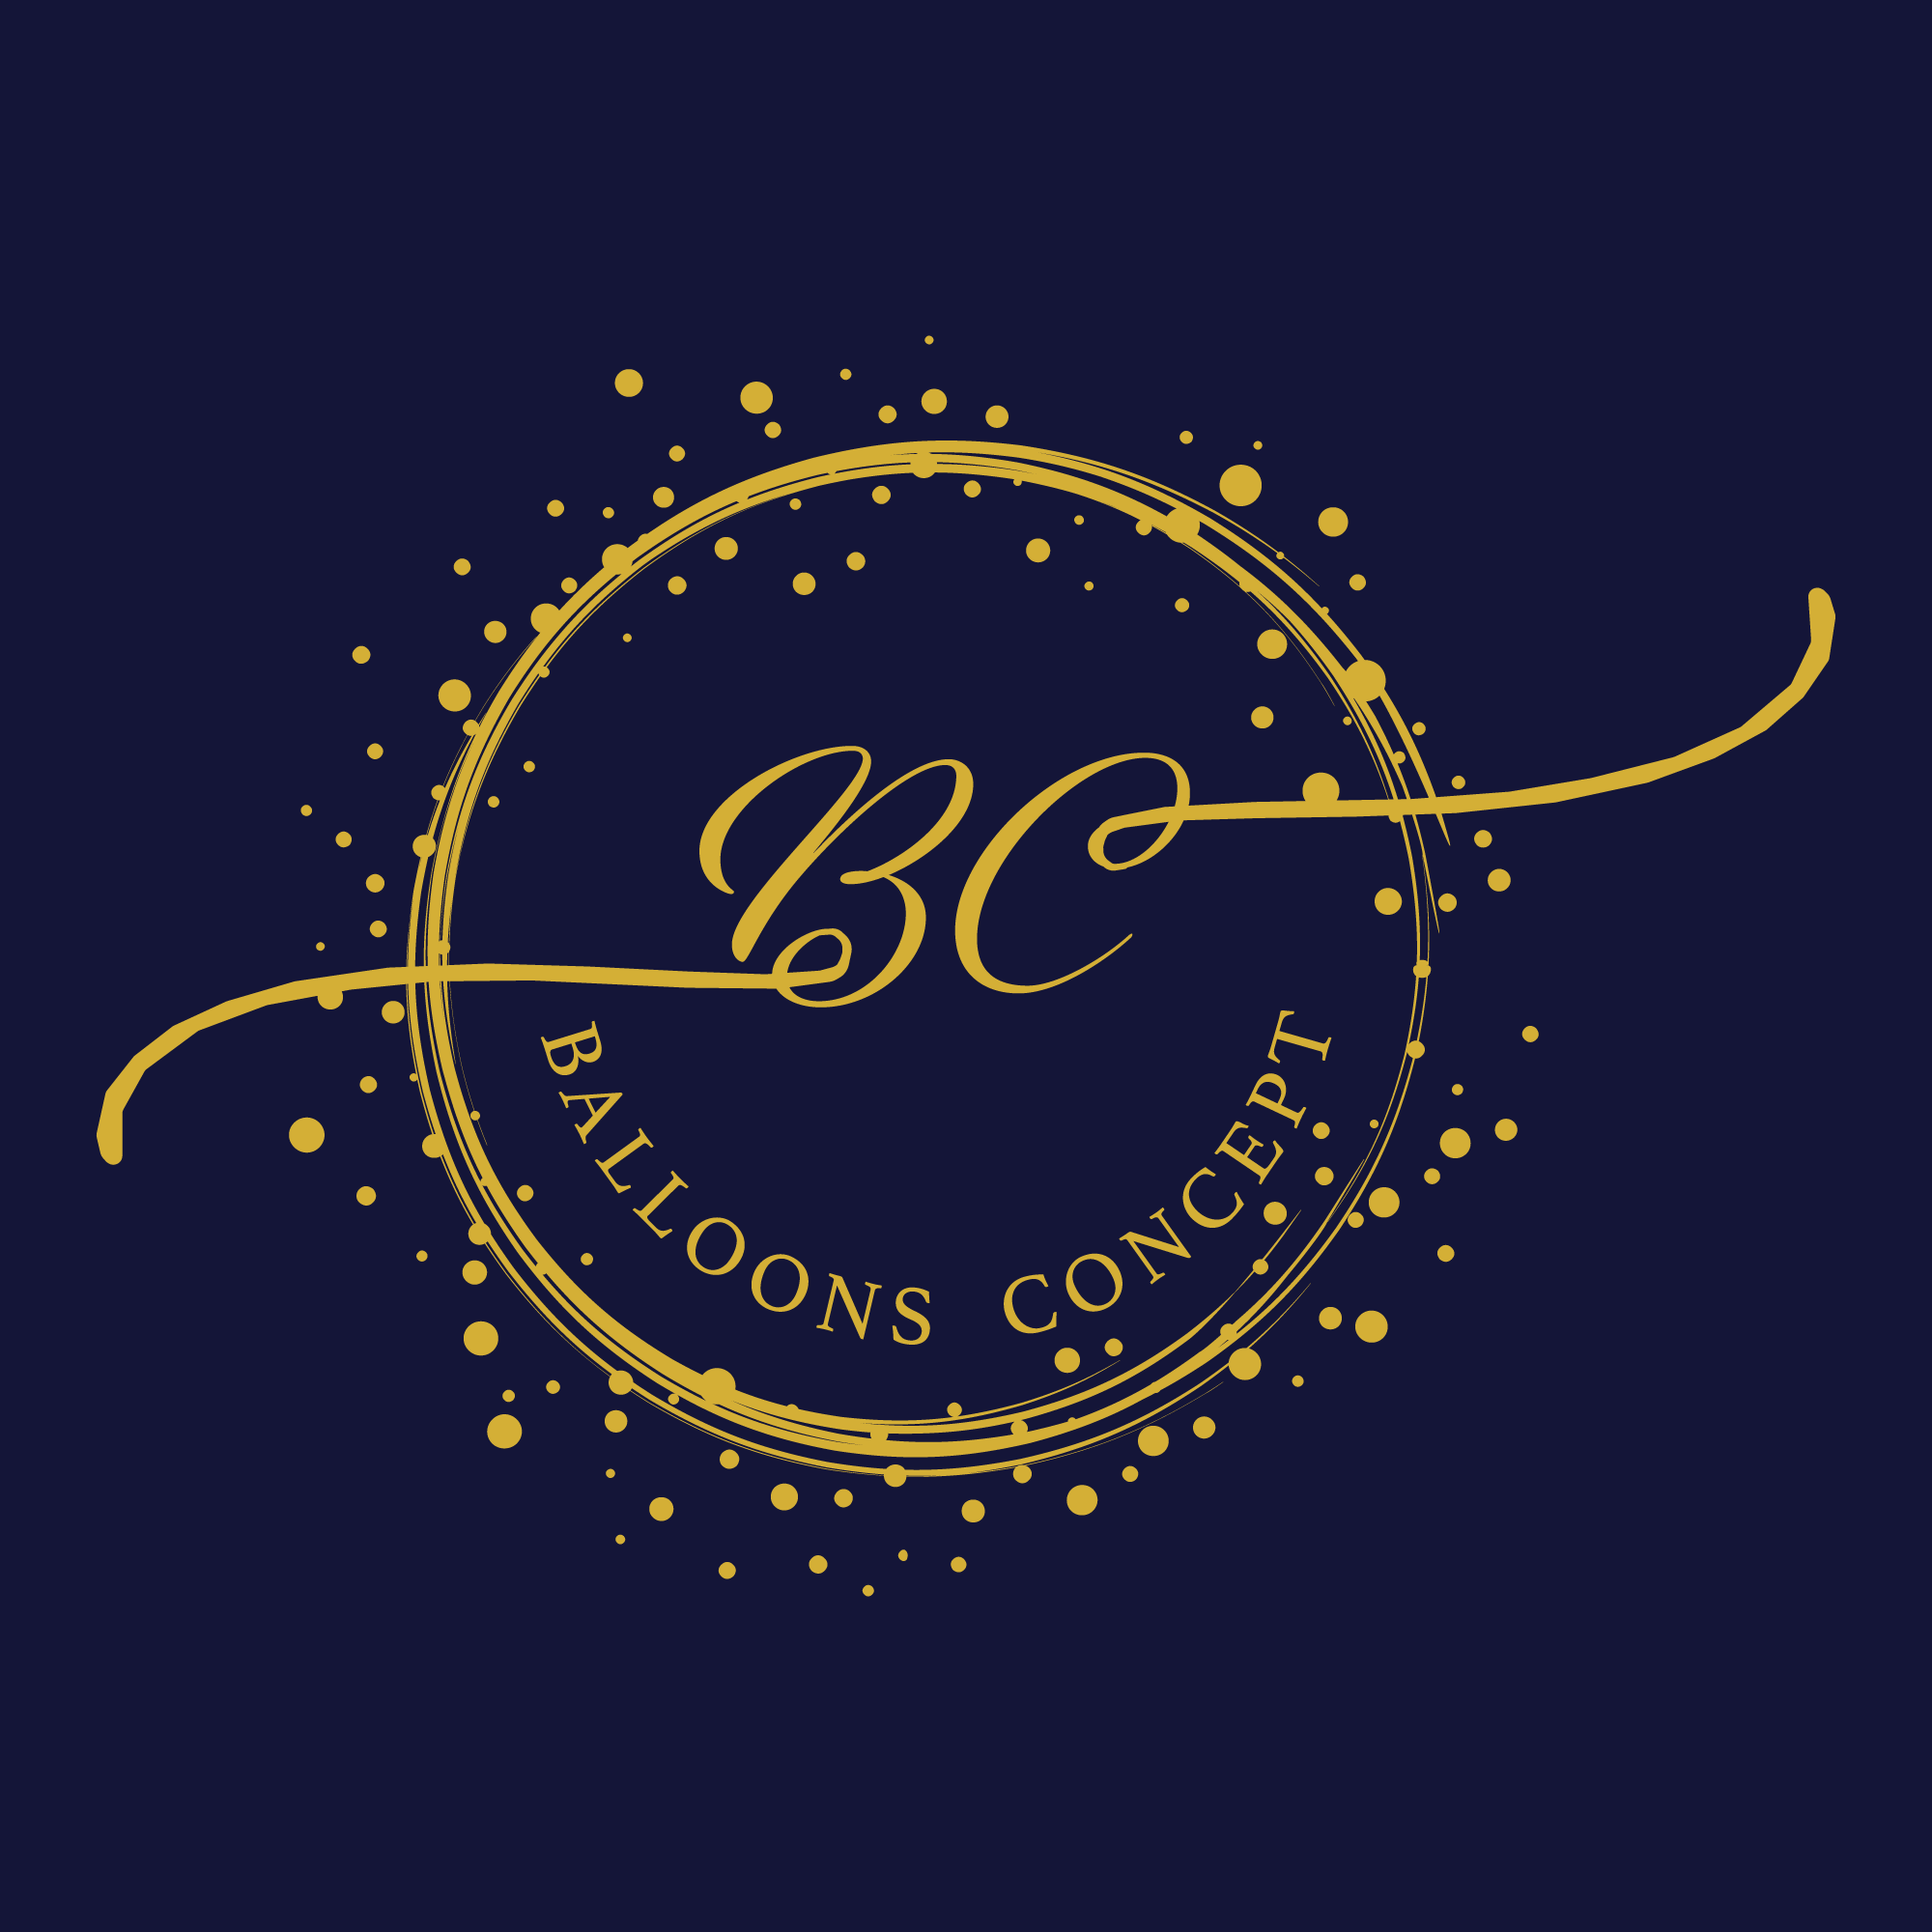 Small and Elegant Decor Services logo